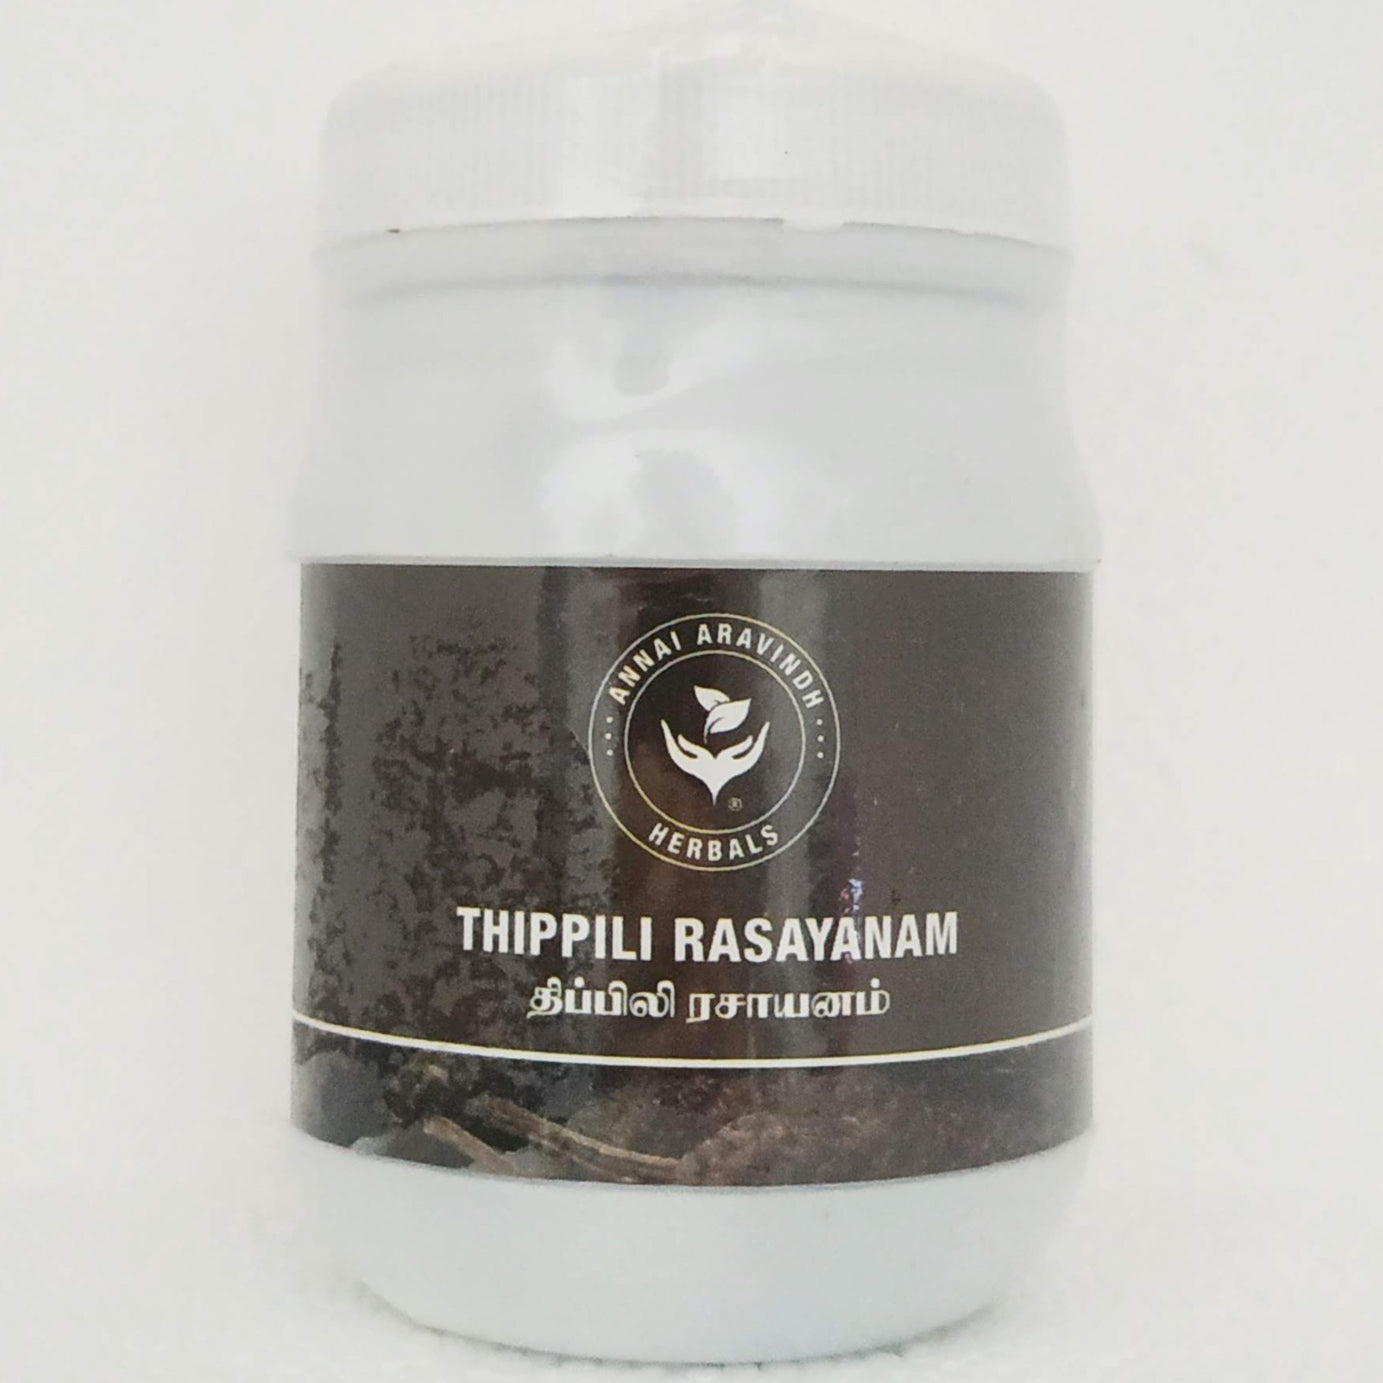 Shop Thippili rasayanam 250gm at price 195.00 from Annai Aravindh Online - Ayush Care